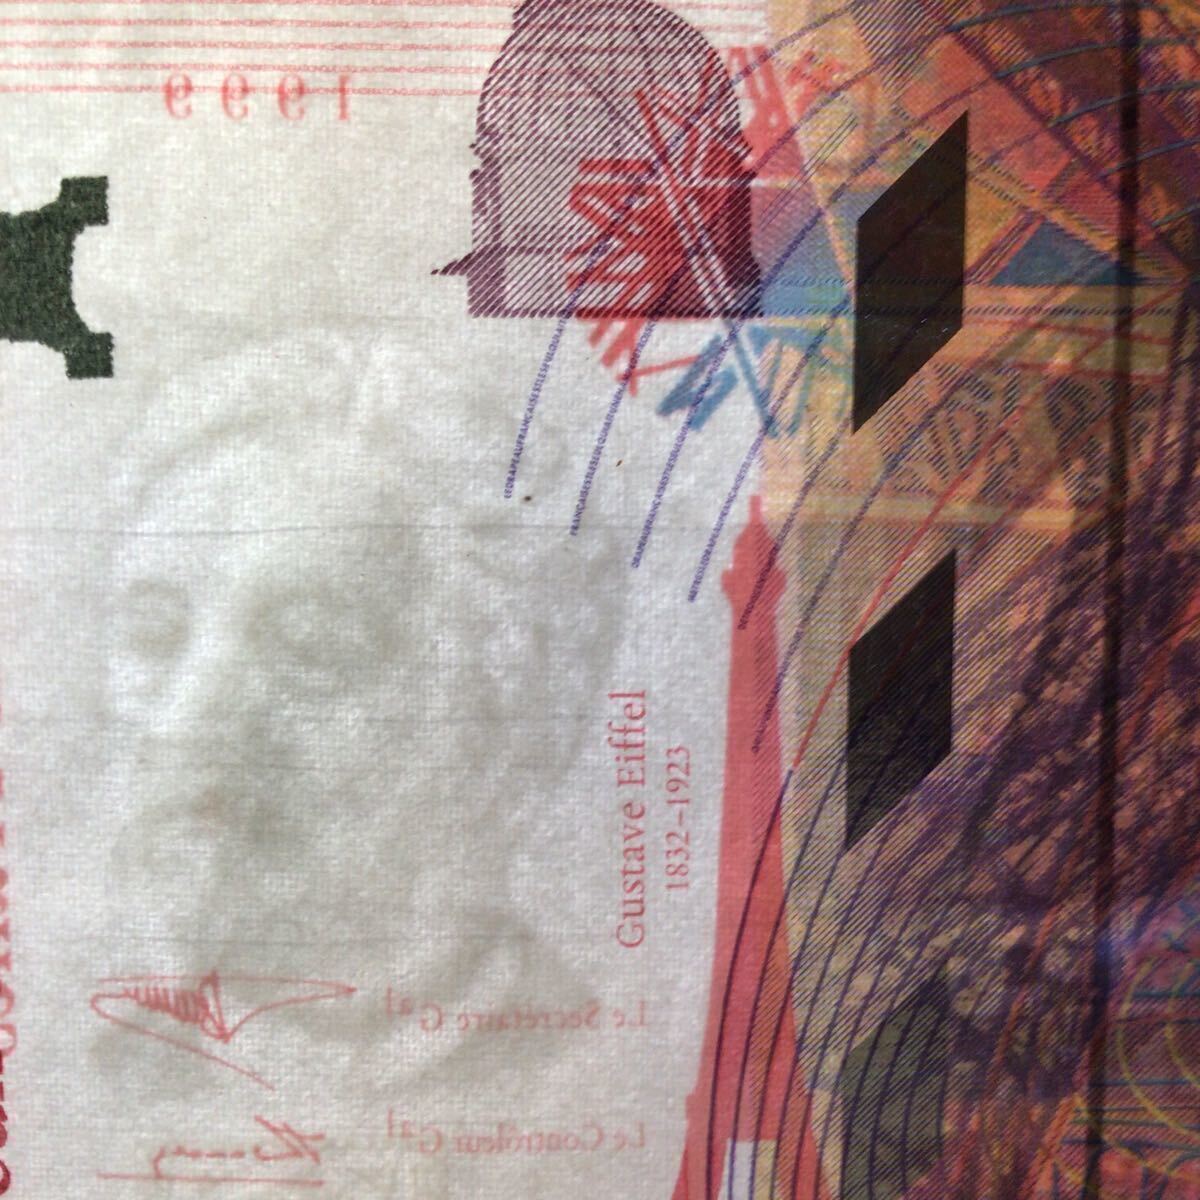 World Banknote Grading FRANCE《Banque de France》200 Francs【1999】『PMG Grading About Uncirculated 55』_画像3